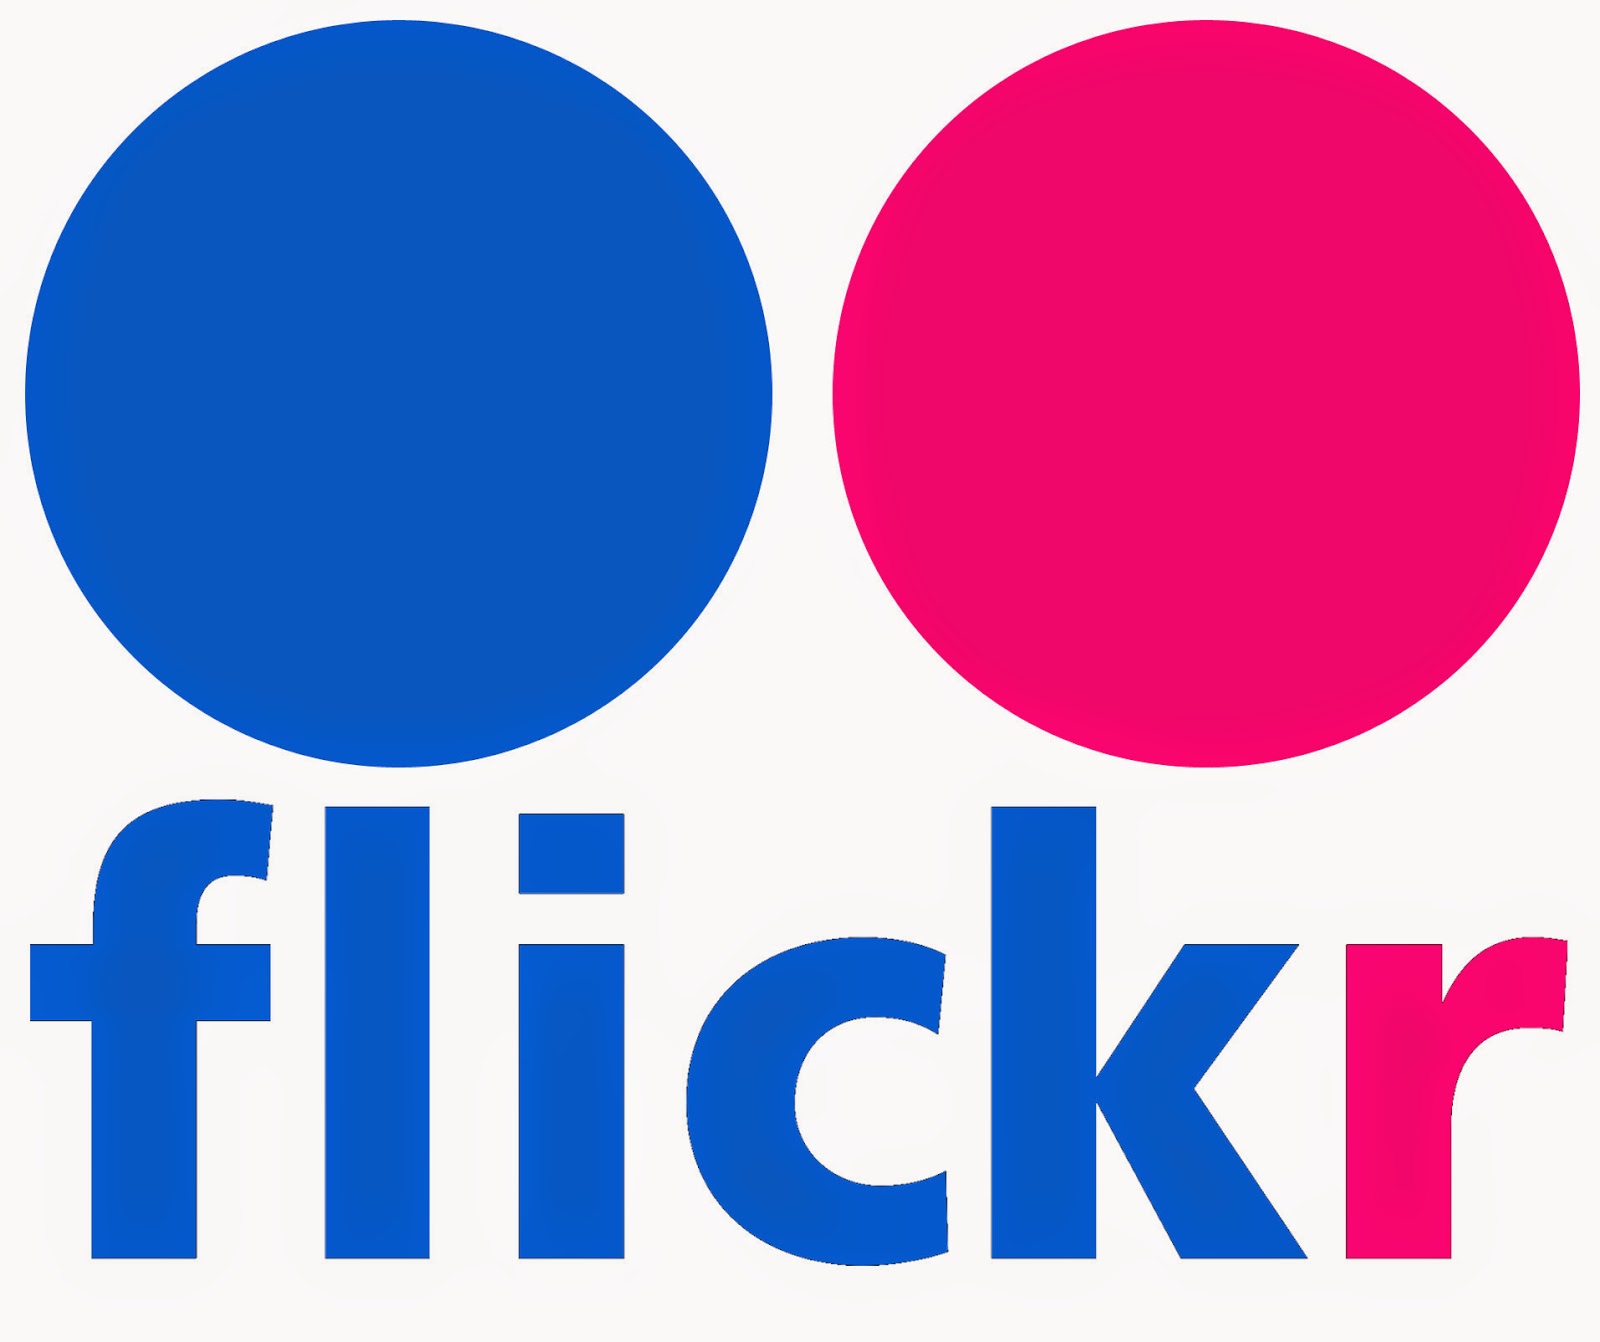 5 Tahun setelah Berdiri Flickr.com akhirnya membeli Flicker.com